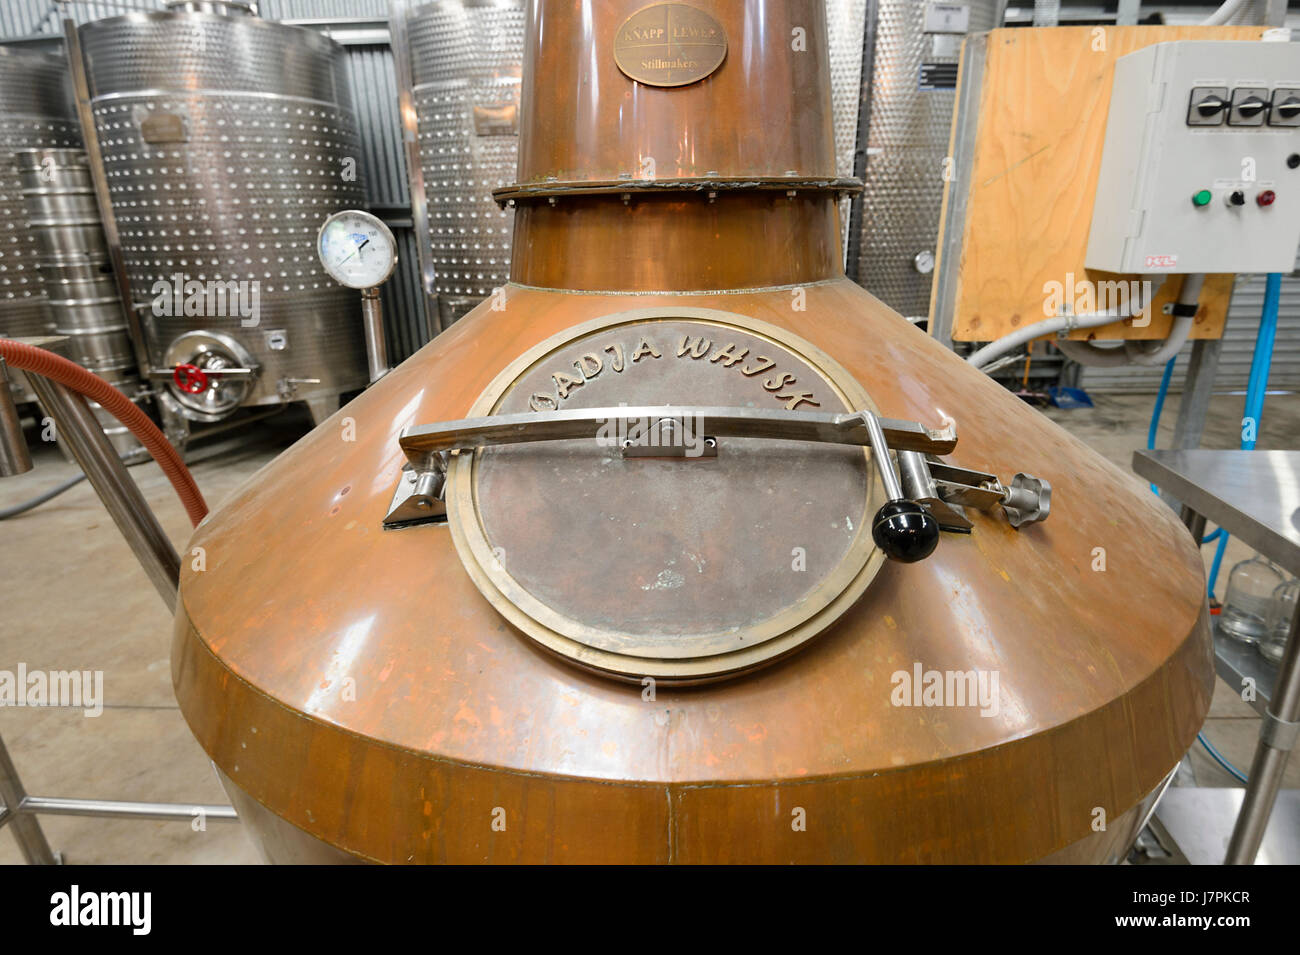 Vat for distilling Whisky at Joadja distillery, Joadja, Southern Highlands, New South Wales, NSW, Australia Stock Photo